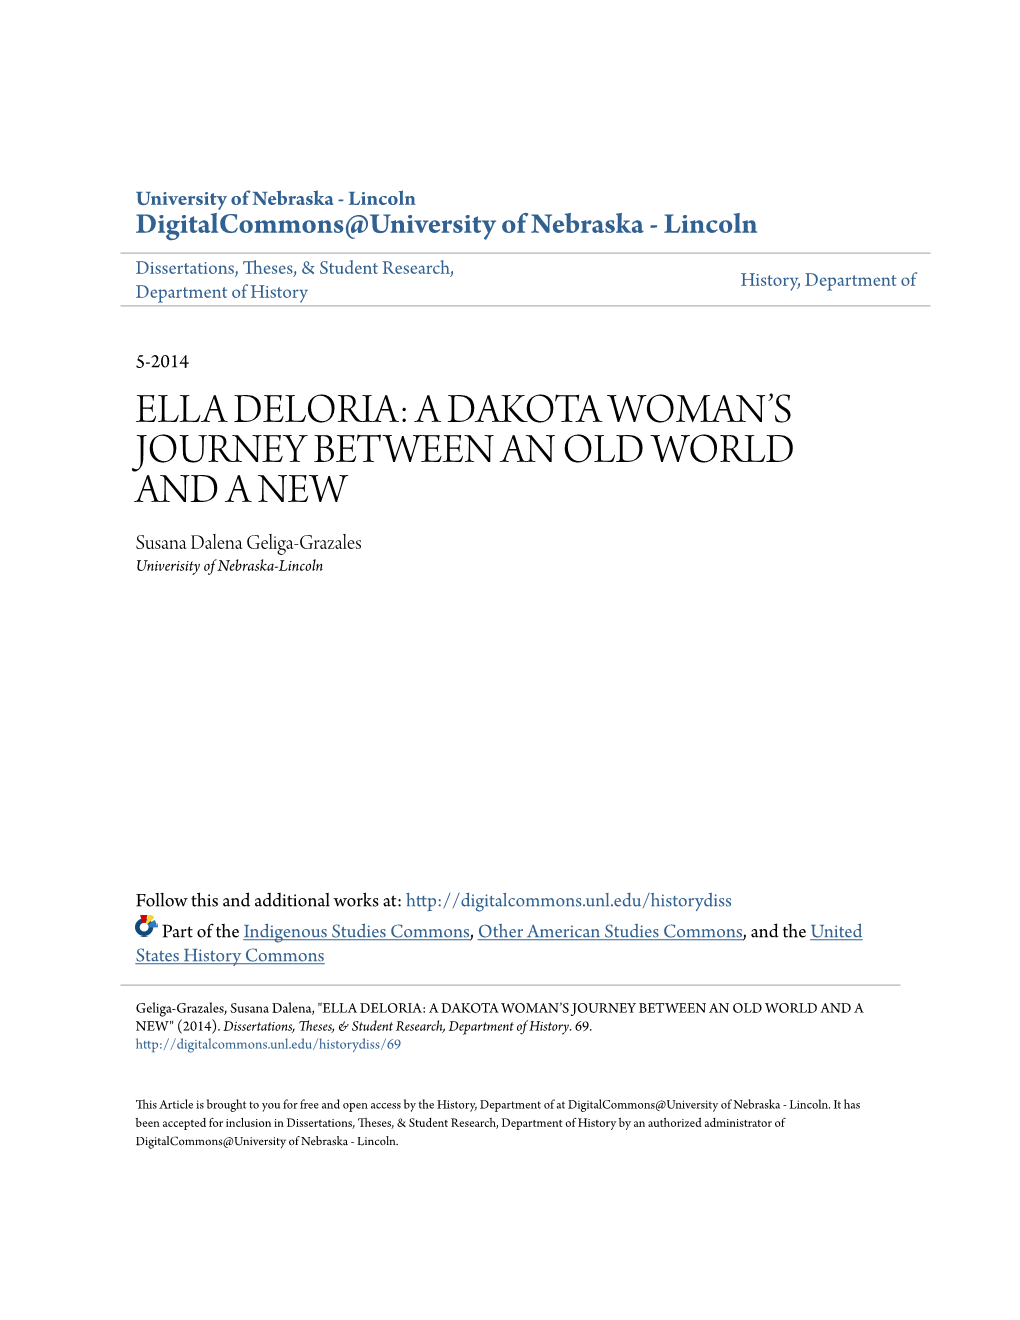 Ella Deloria: a Dakota Woman's Journey Between an Old World And